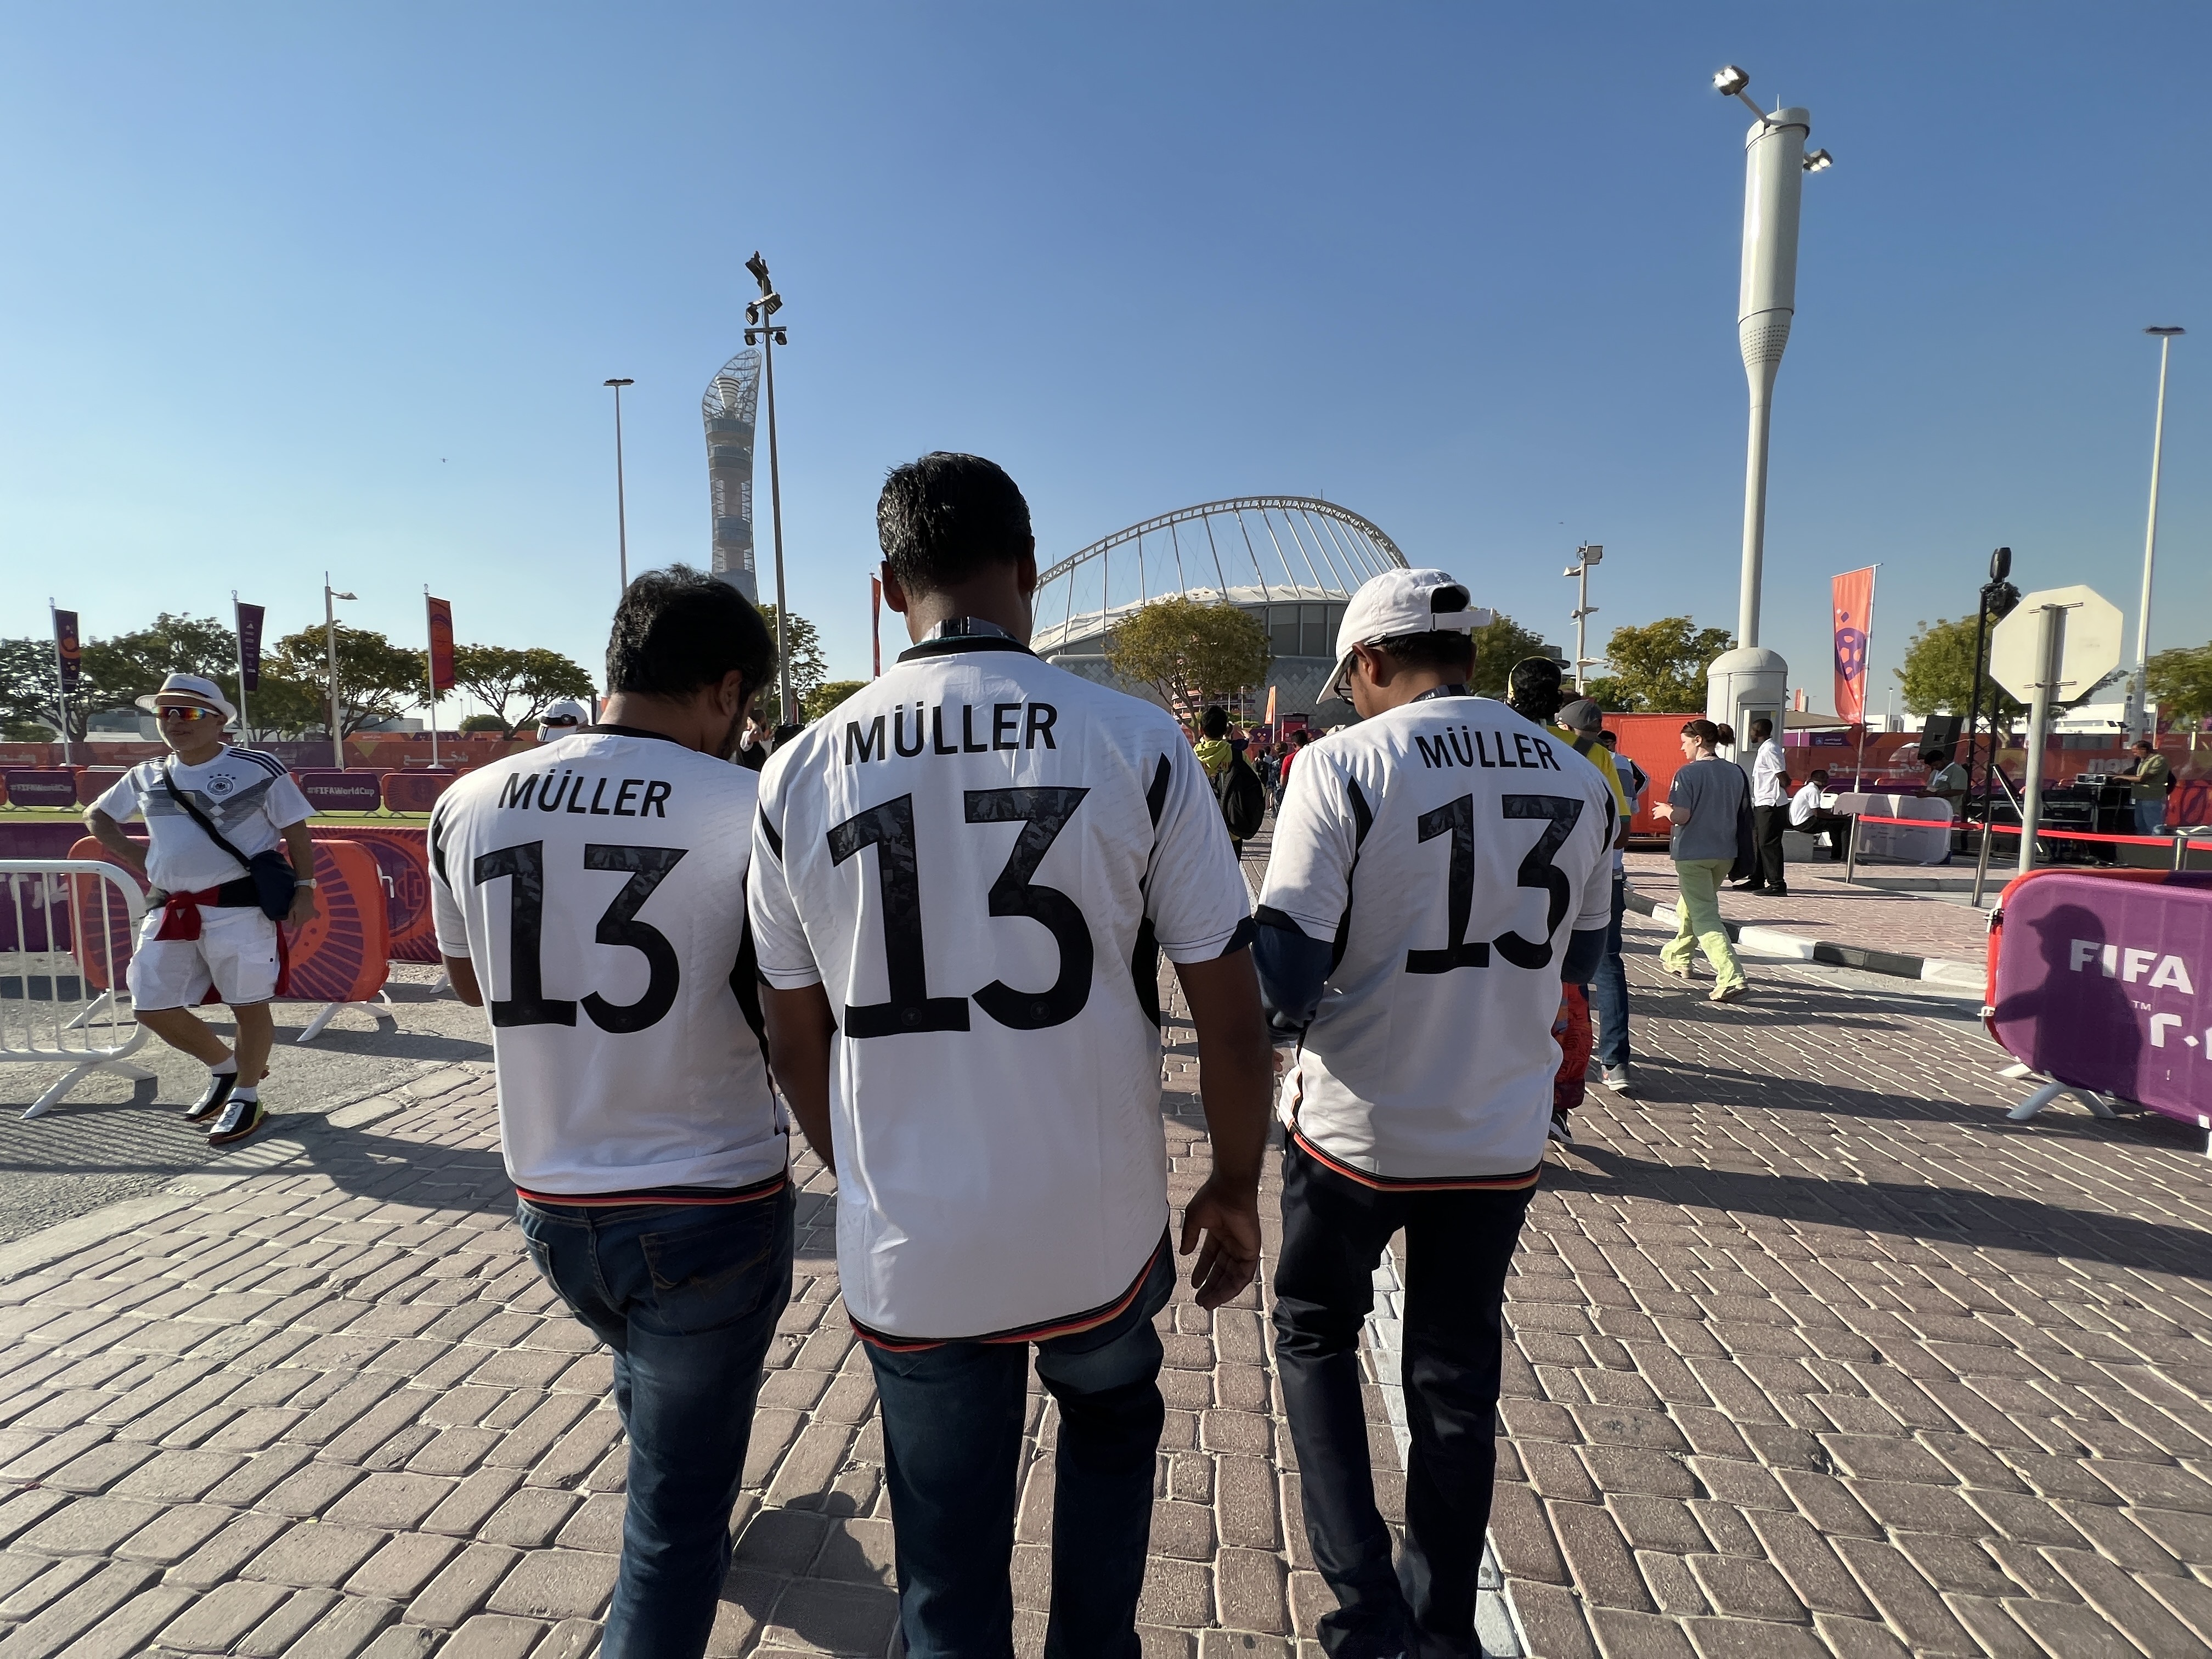 Germany fans in Qatar on November 23.